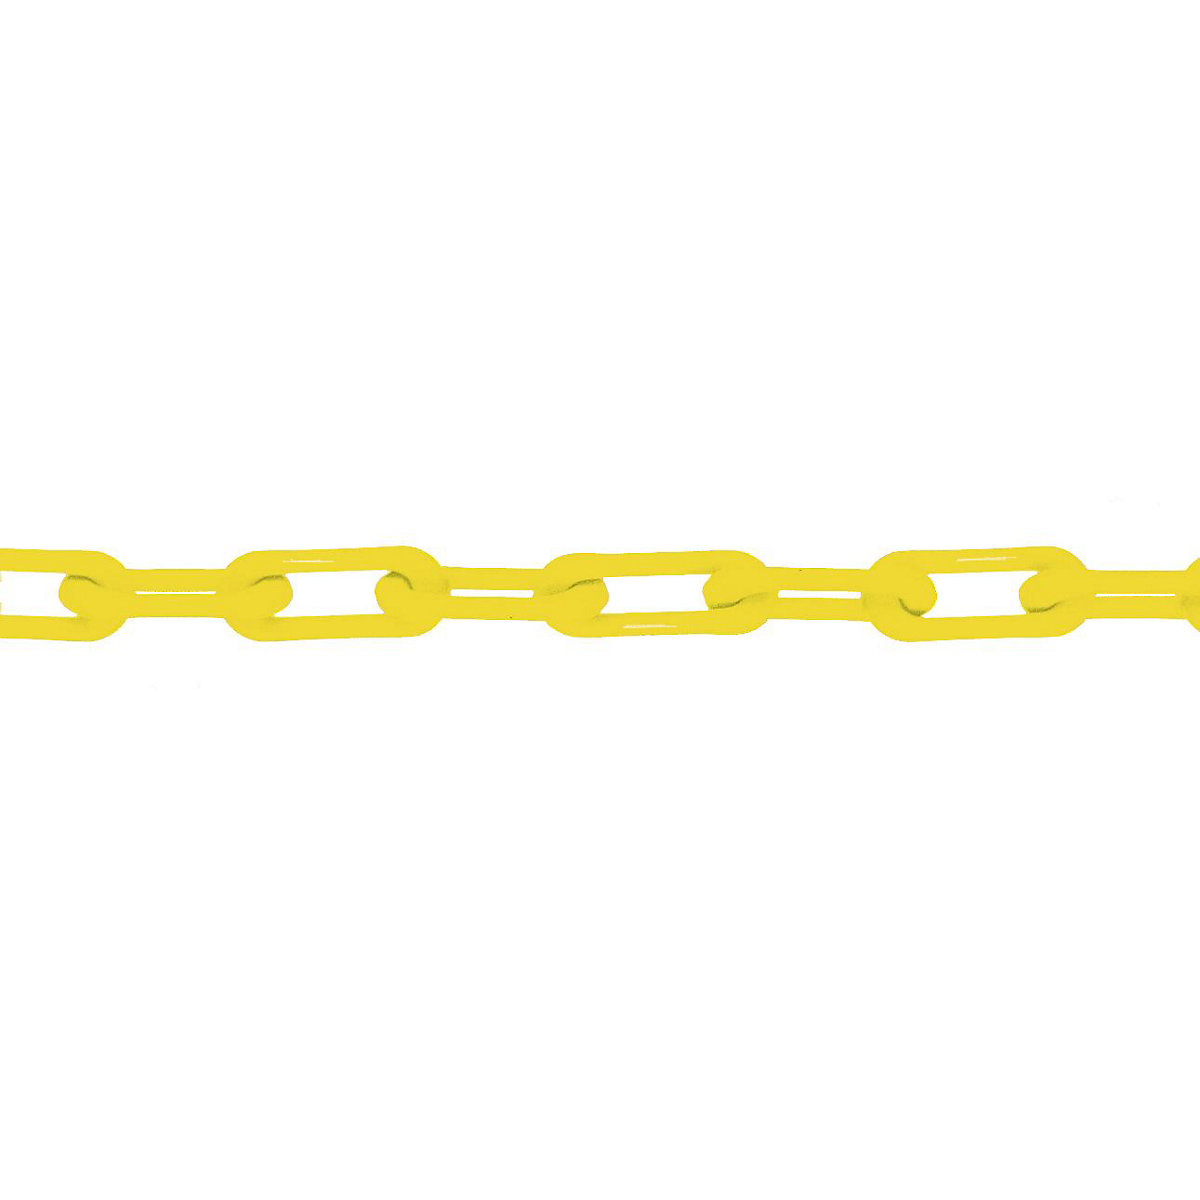 Nylon chain, MNK quality standard 6, band length 50 m, yellow, 4+ items-5